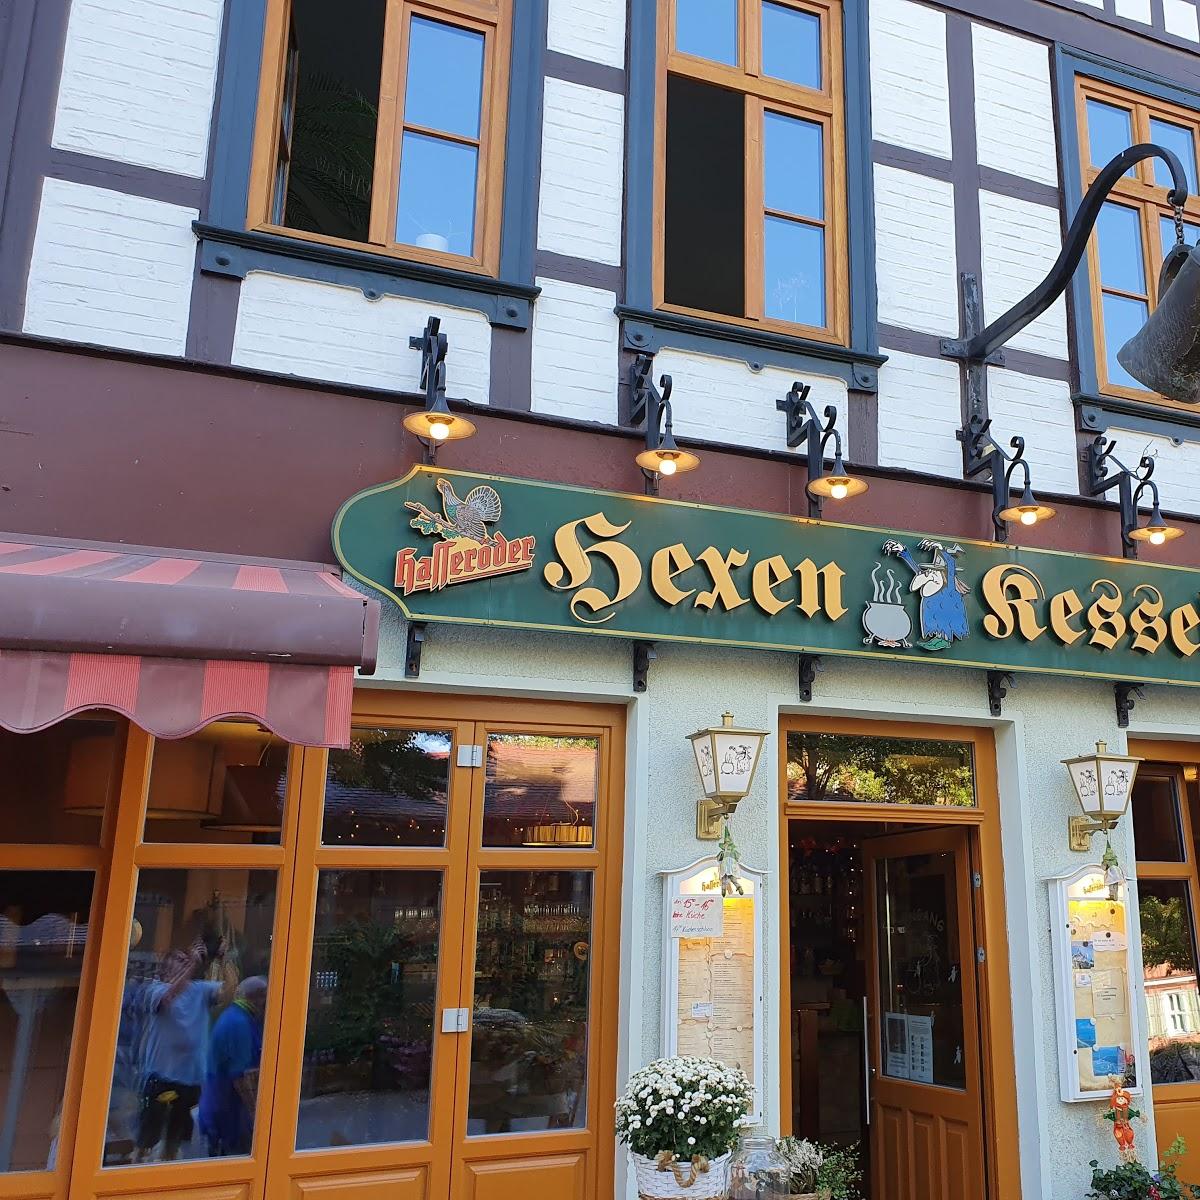 Restaurant "Restaurant Hexenkessel" in  Wernigerode